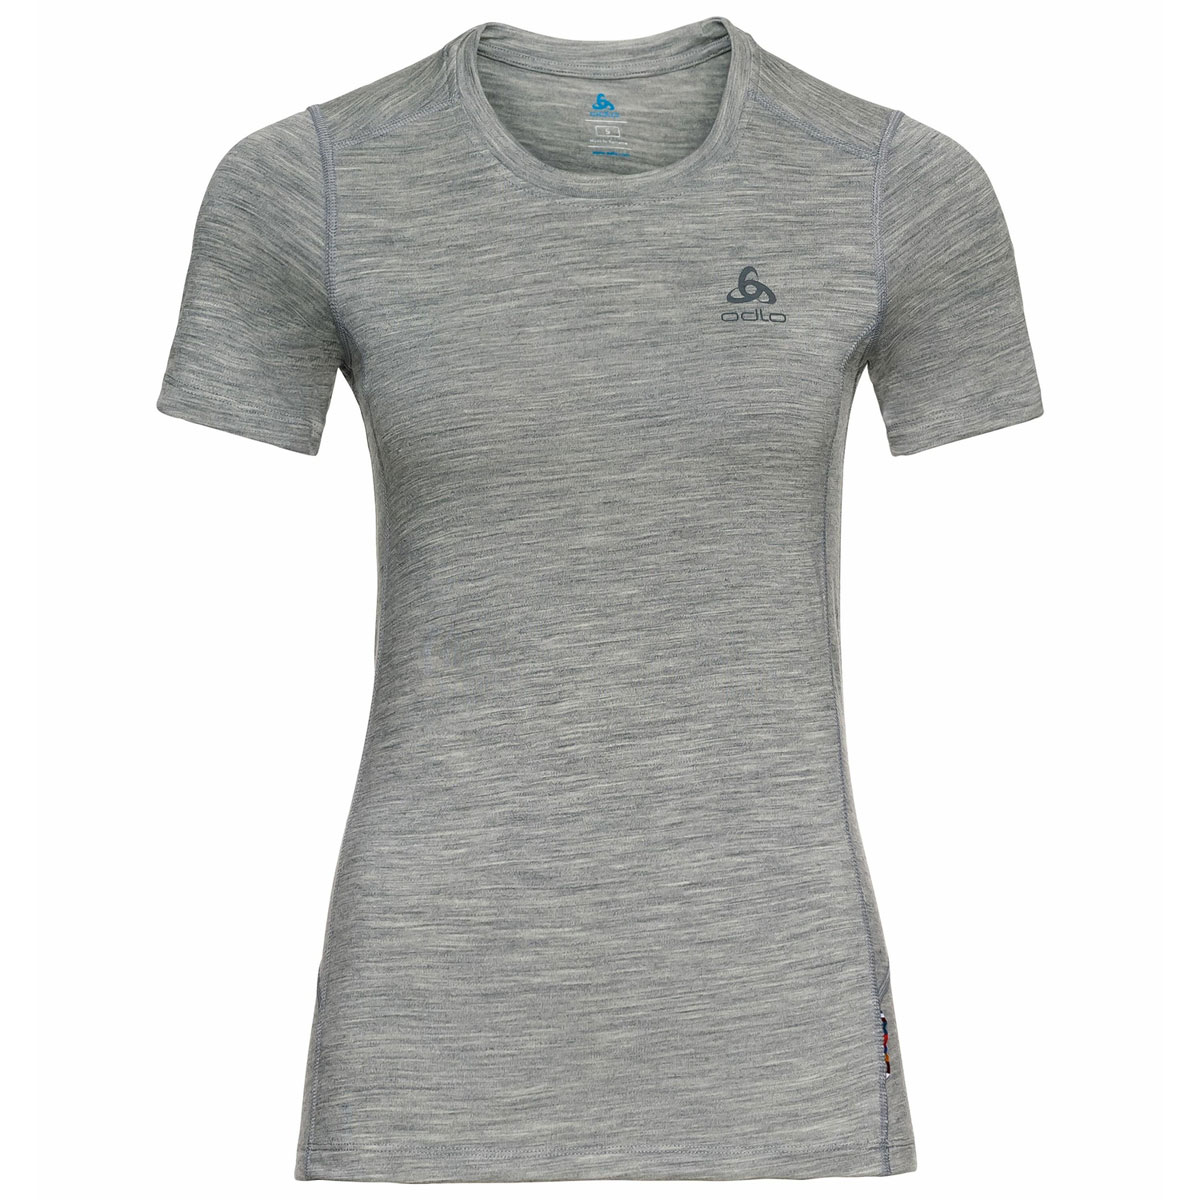 Produktbild von Odlo Damen NATURAL 100% MERINO WARM T-Shirt - grey melange - grey melange